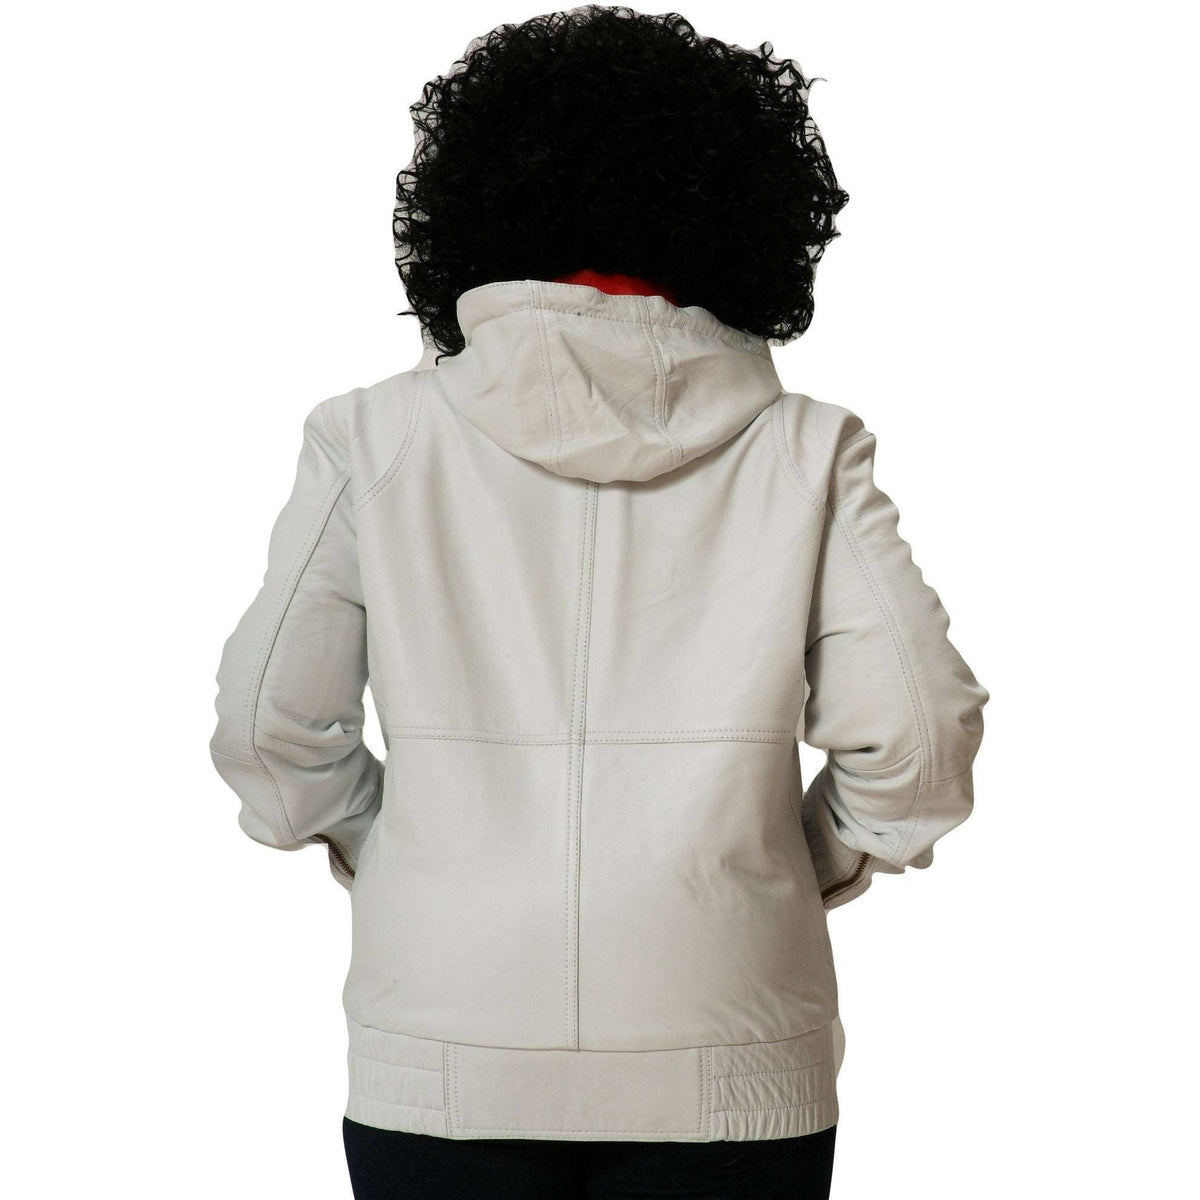 Womens white leather hooded jacket back